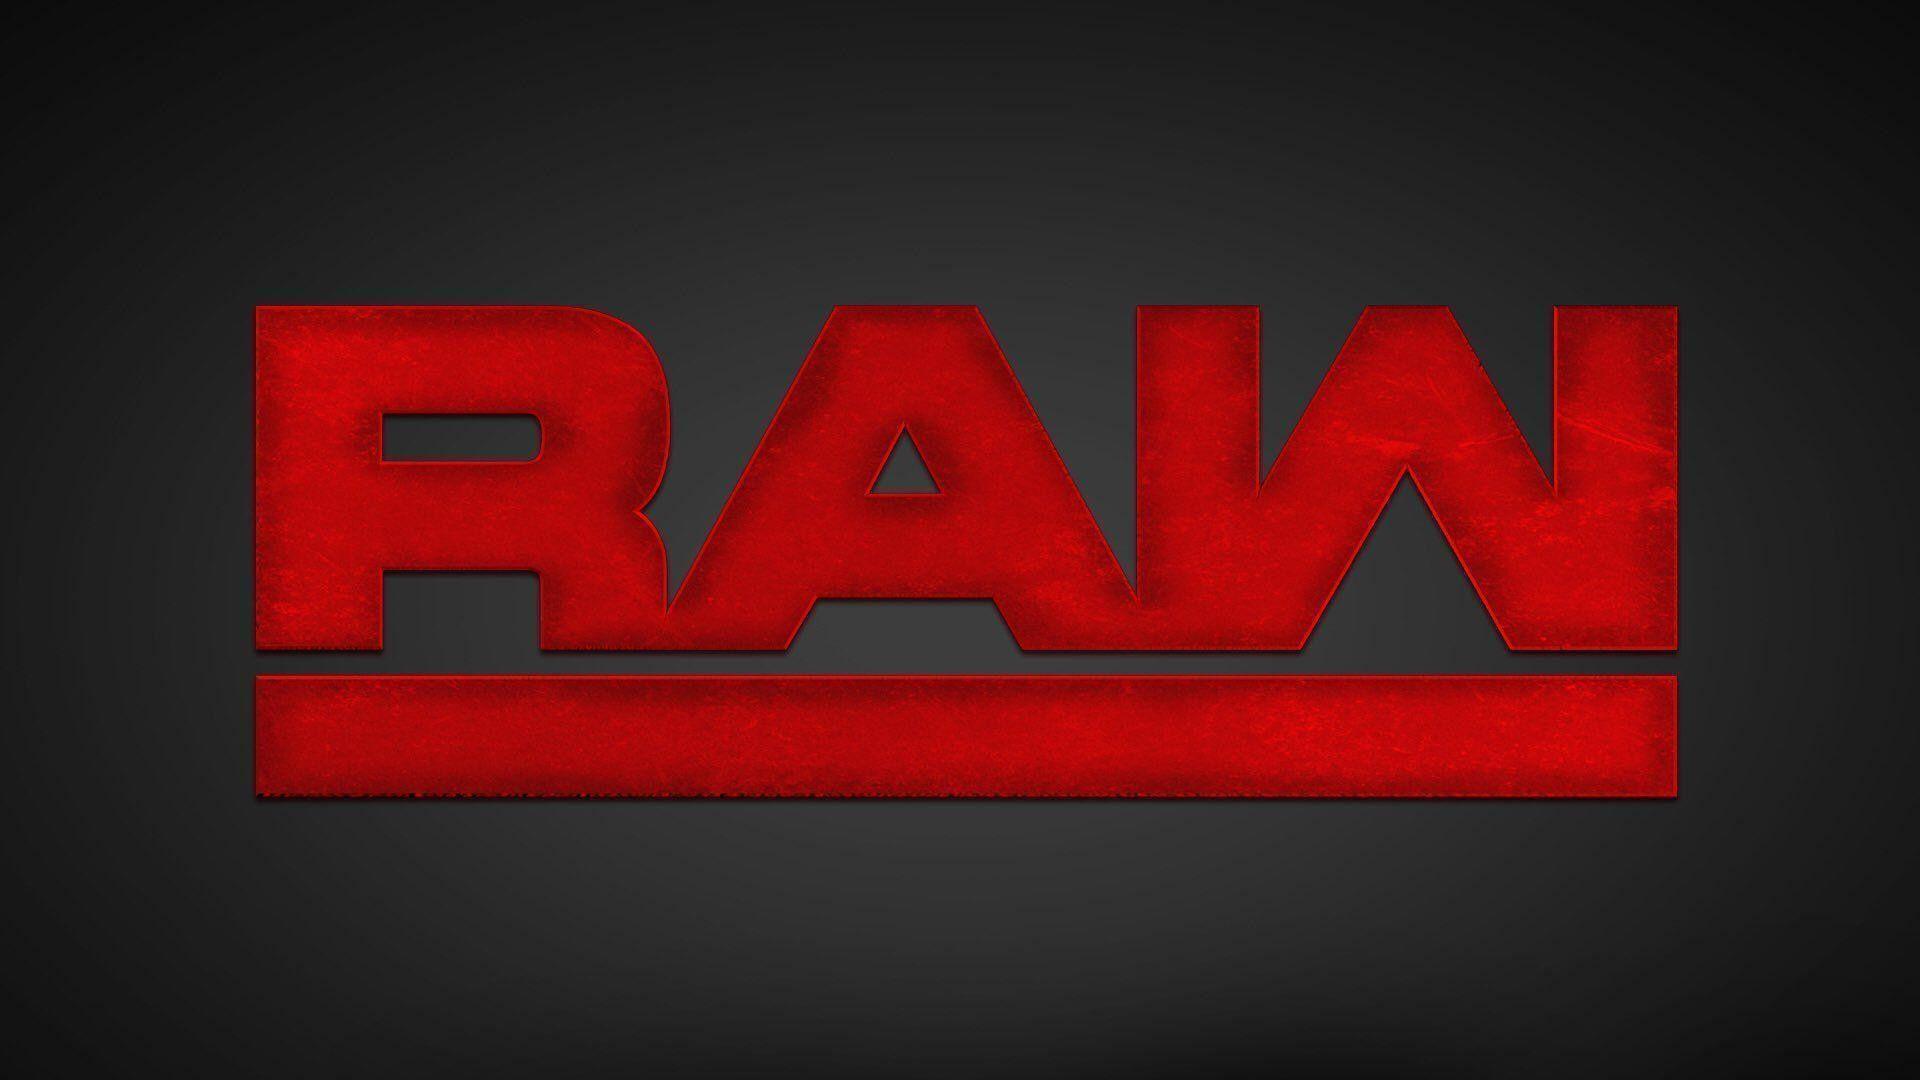 WWE Logo Wallpaper 2018